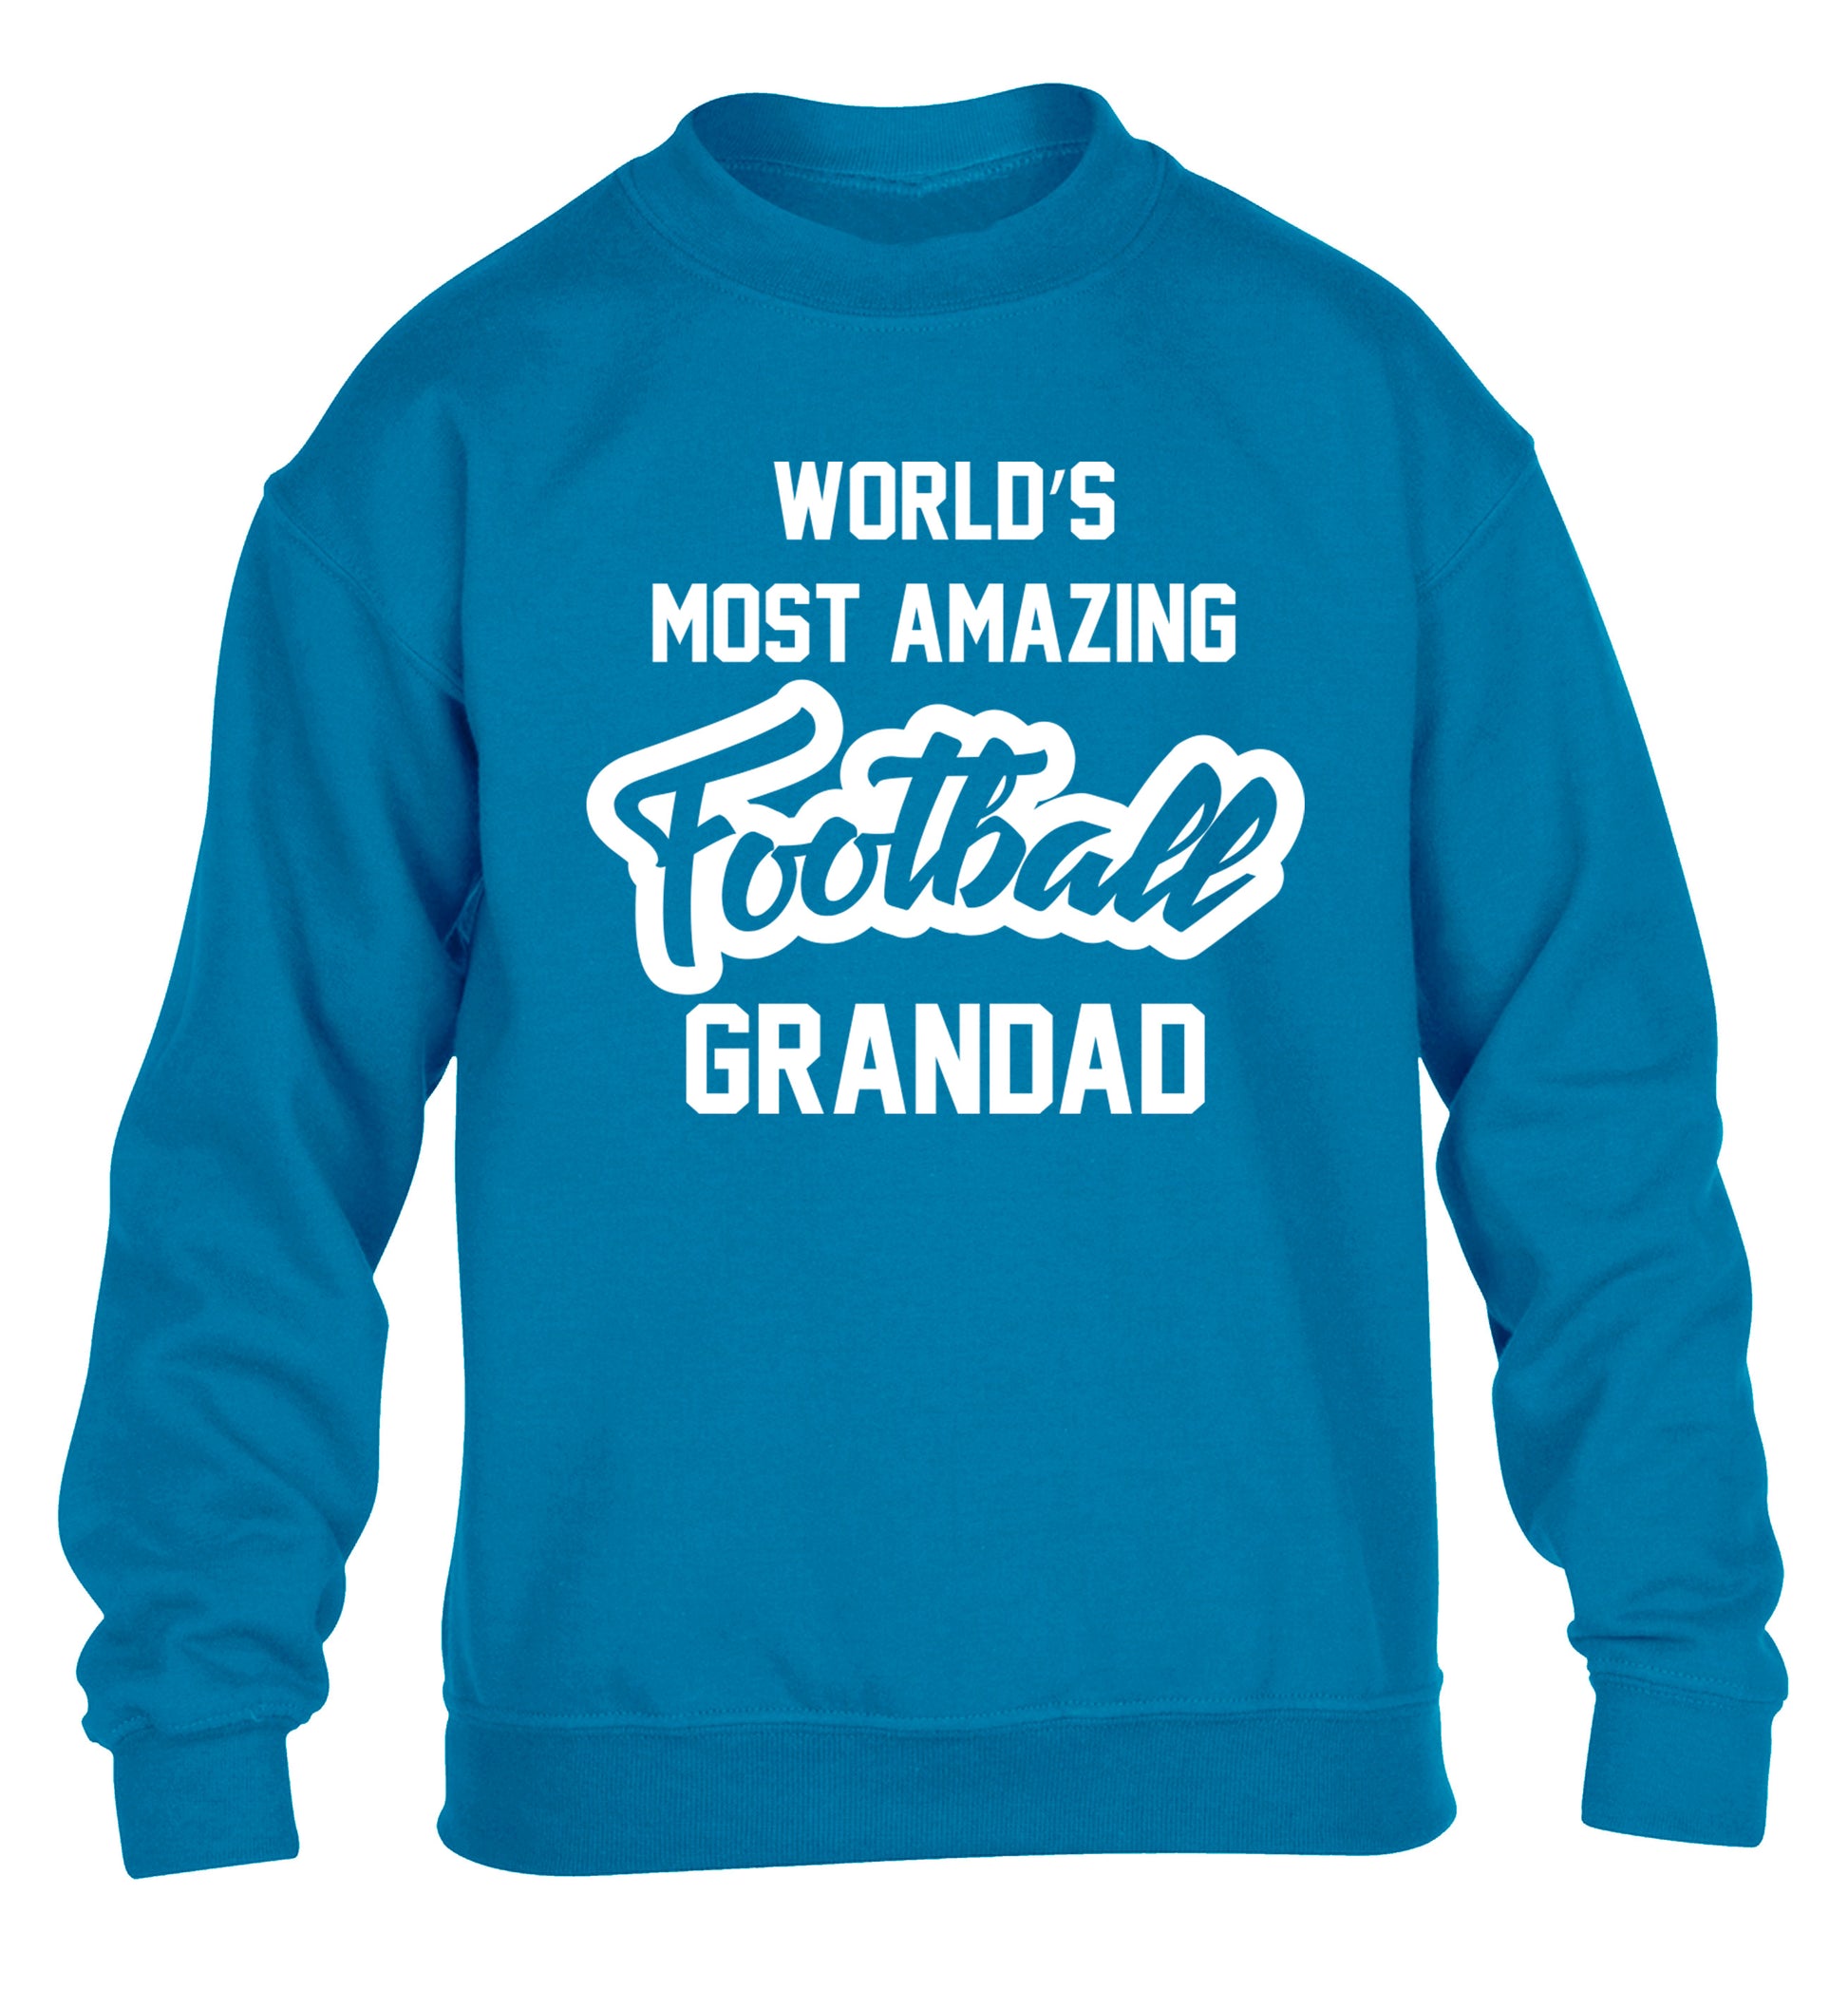 Worlds most amazing football grandad children's blue sweater 12-14 Years